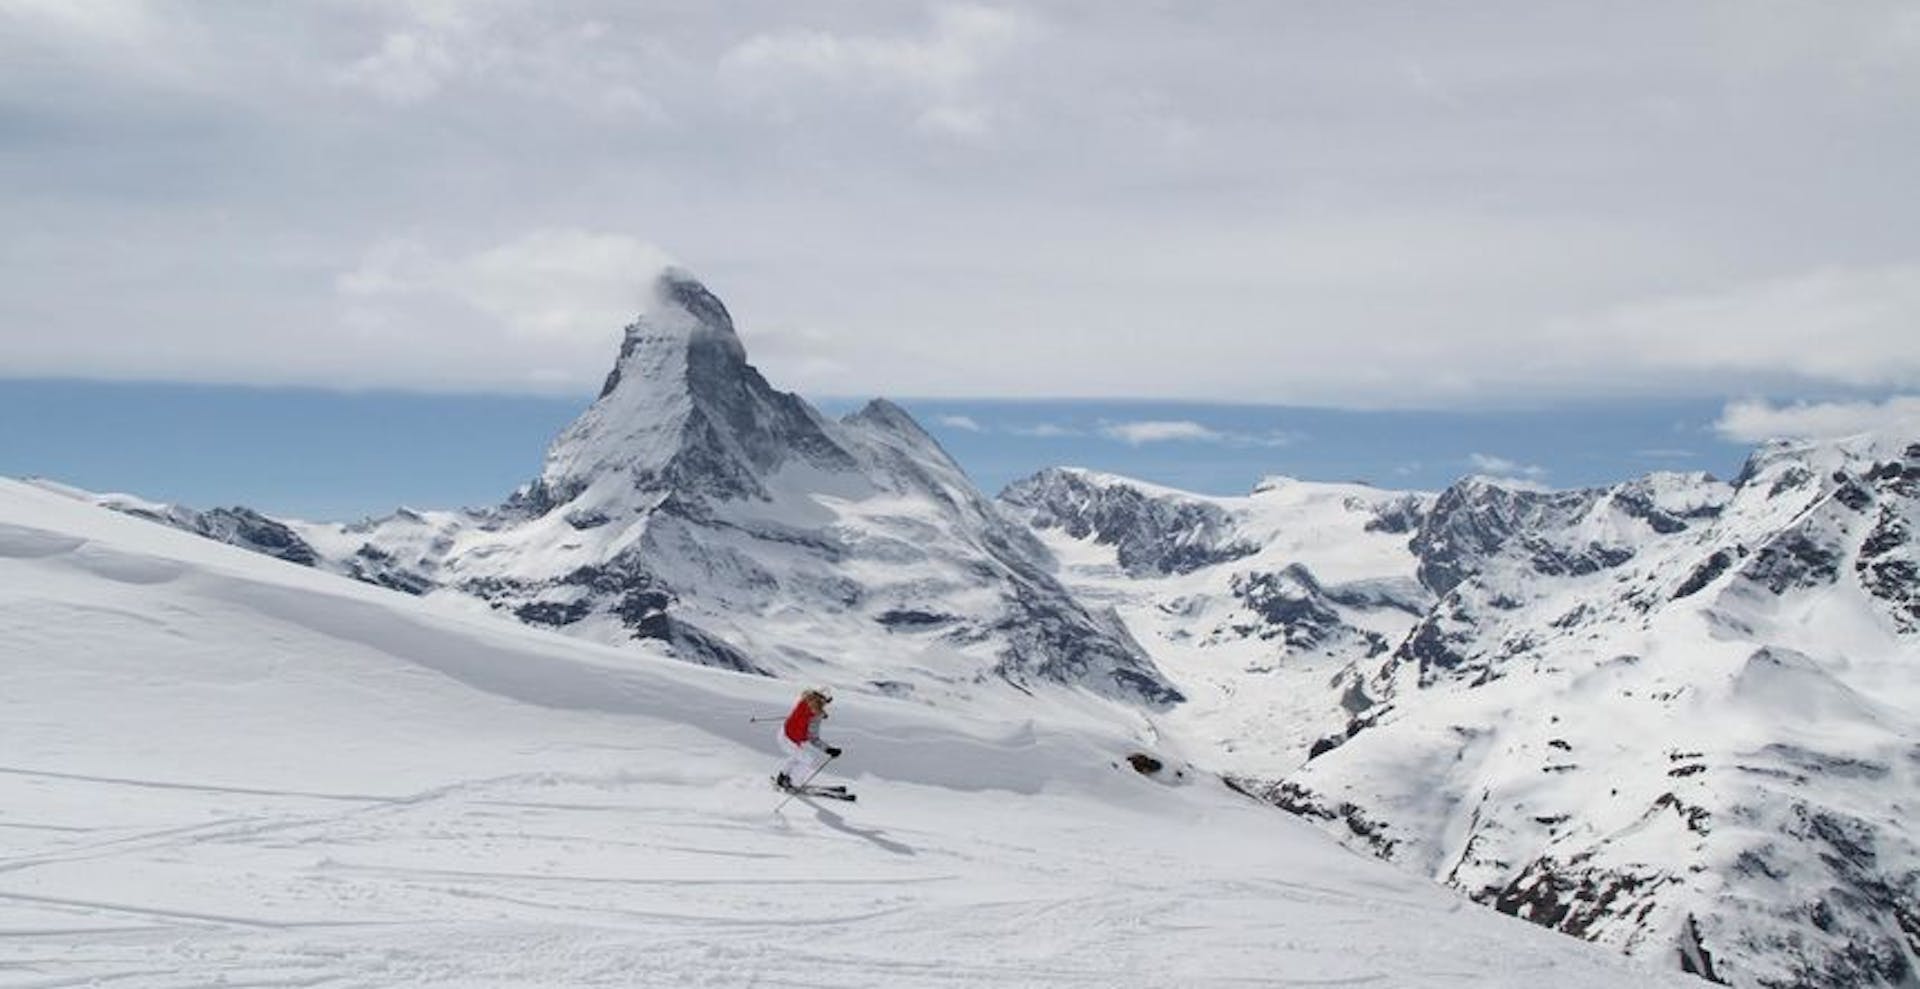 Taking first place on our list, it's Zermatt!